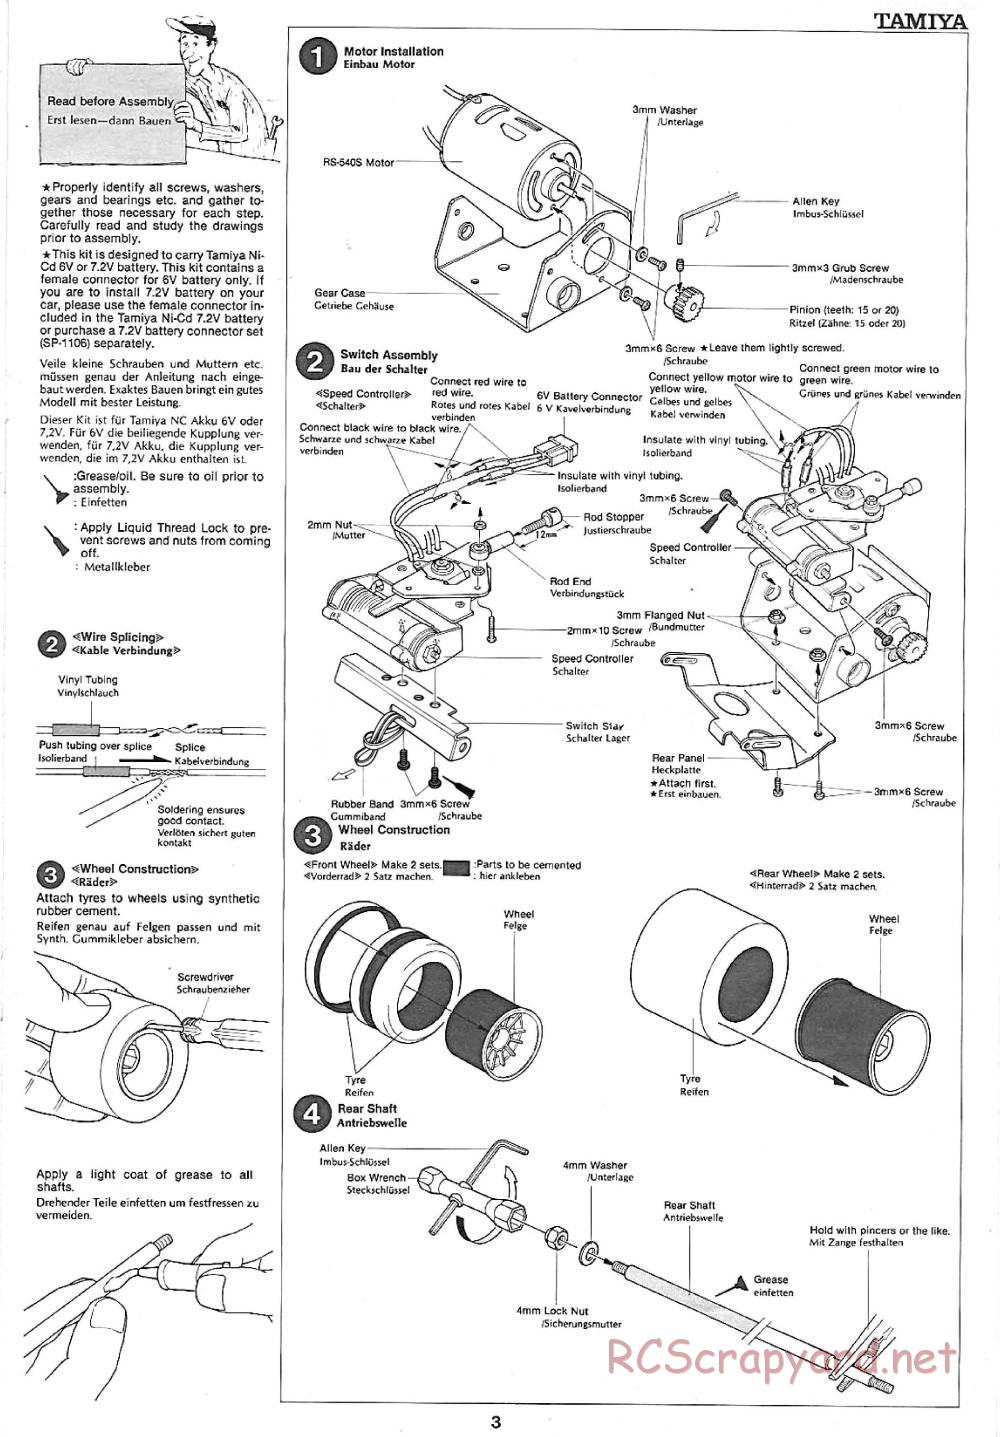 Tamiya - Renault 5 Turbo (CS) - 58026 - Manual - Page 3